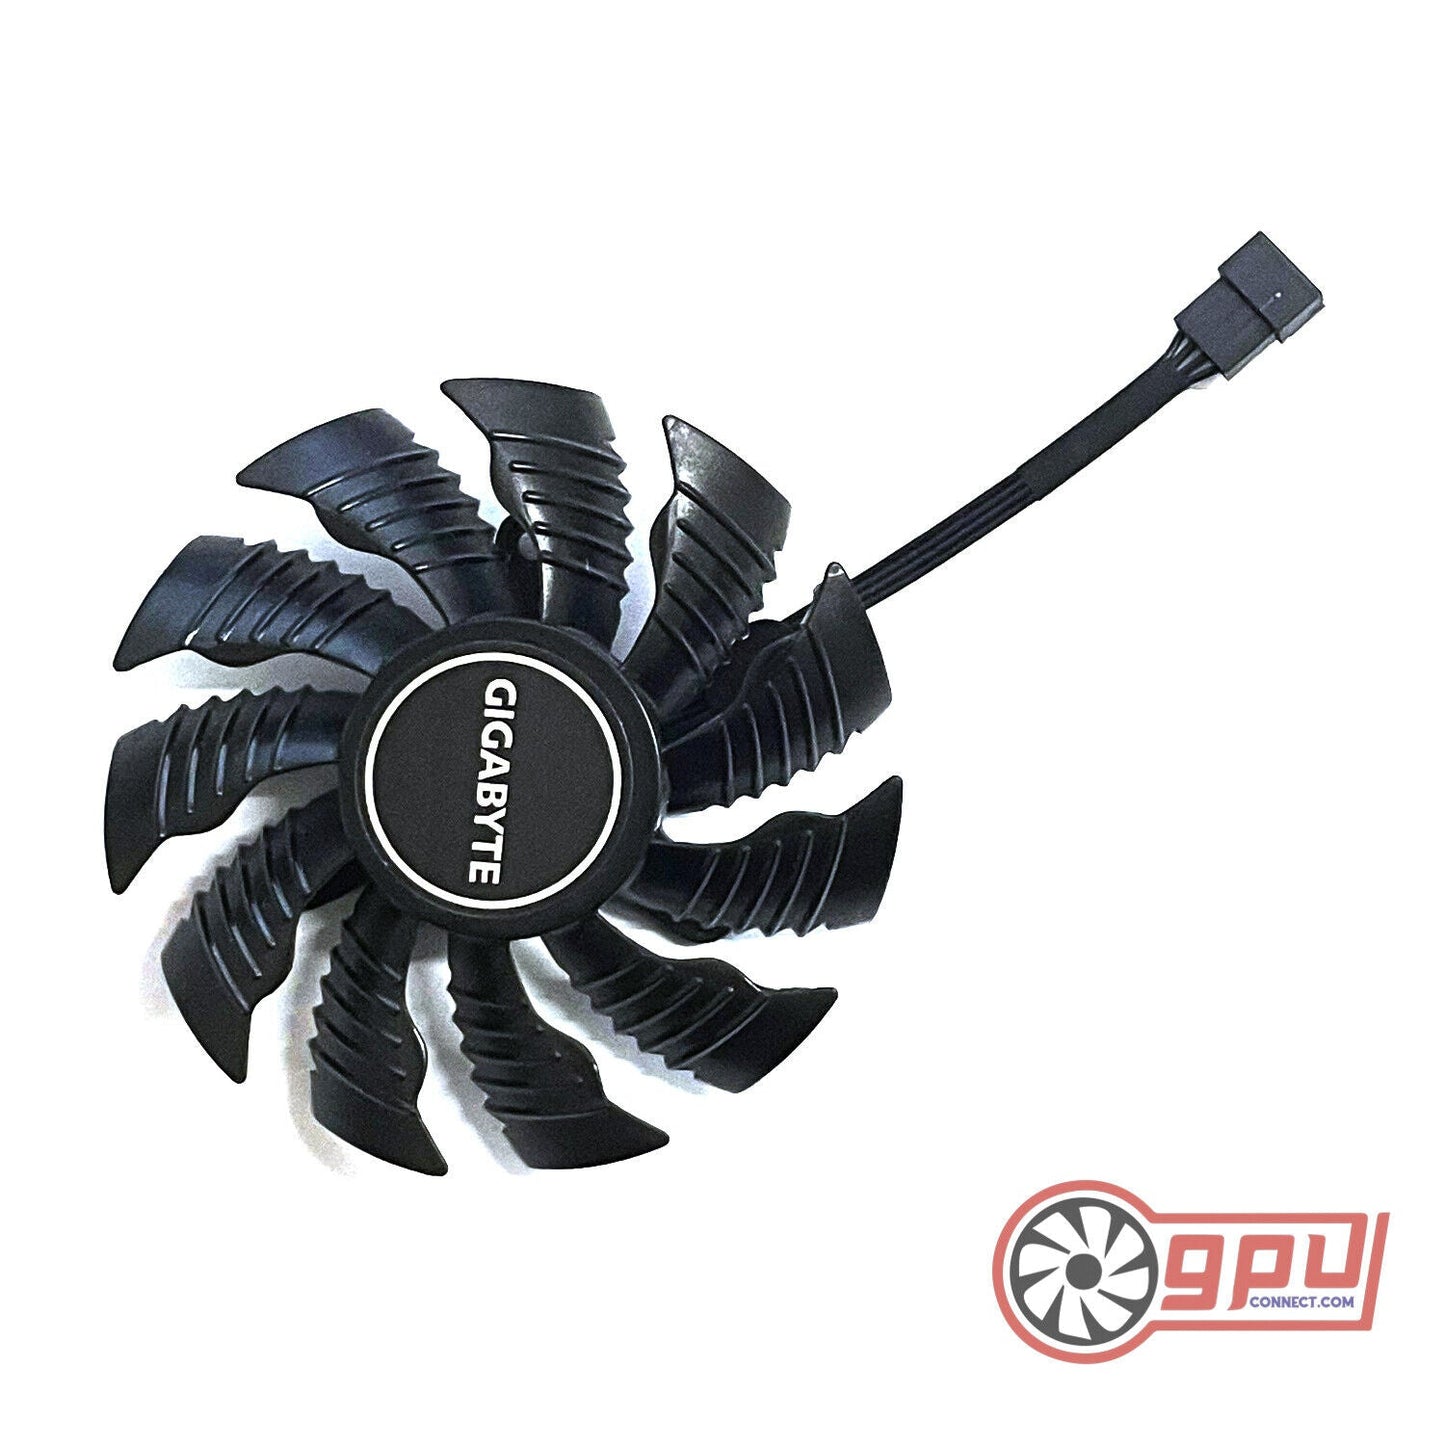 GIGABYTE RTX 2060 2070 2080 Ti GAMING WINDFORCE Cooling Fan Set 82mm - GPUCONNECT.COM